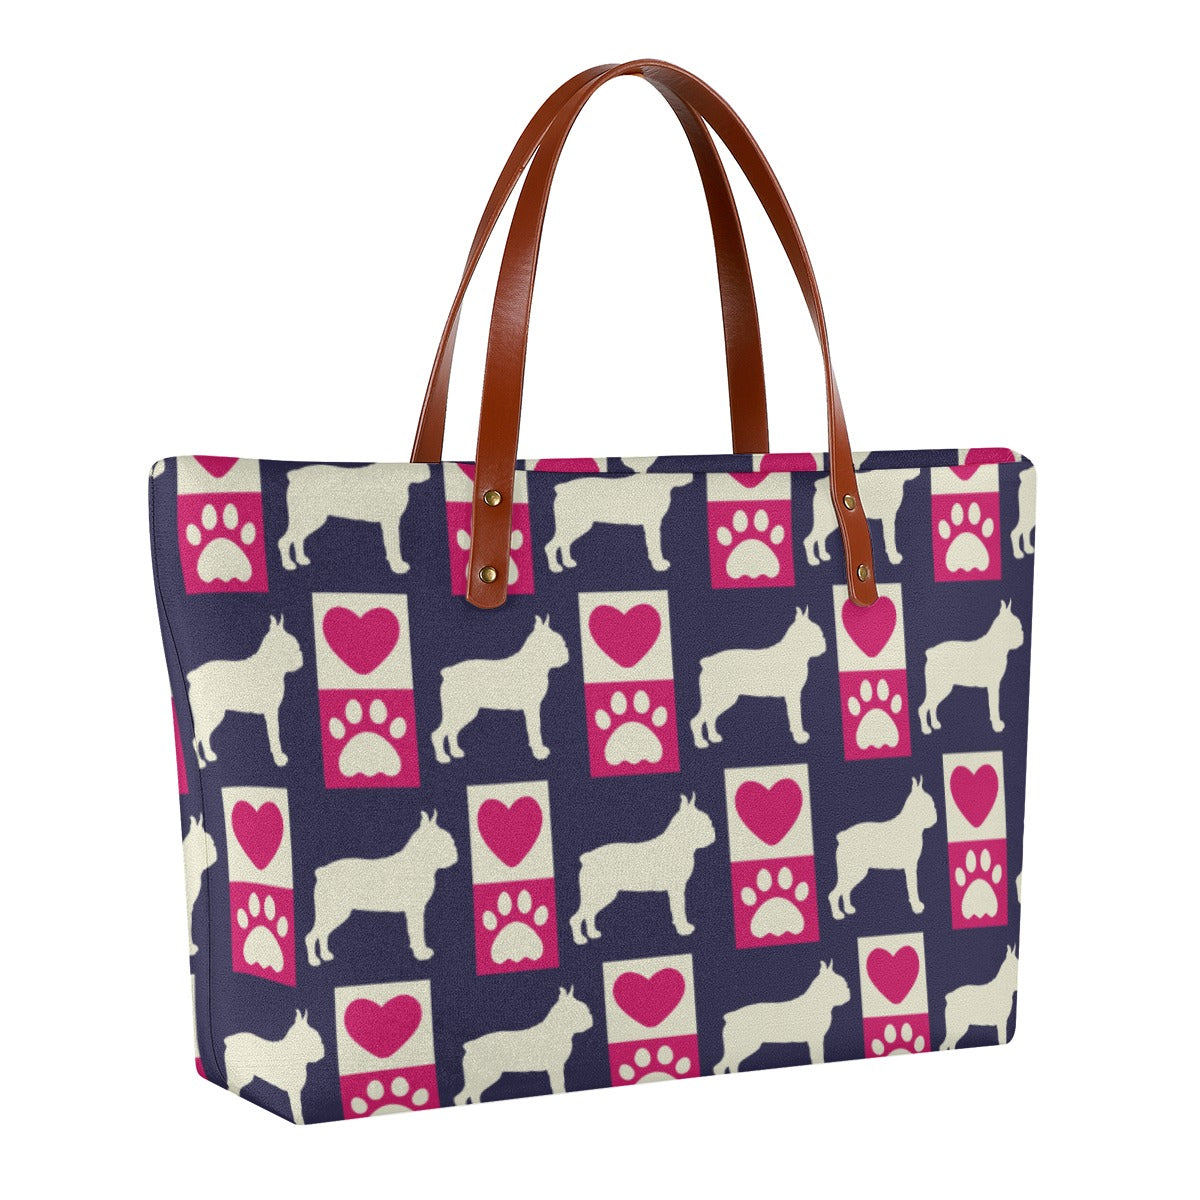 Bishop- Women's Tote Bag for Boston Terrier lovers